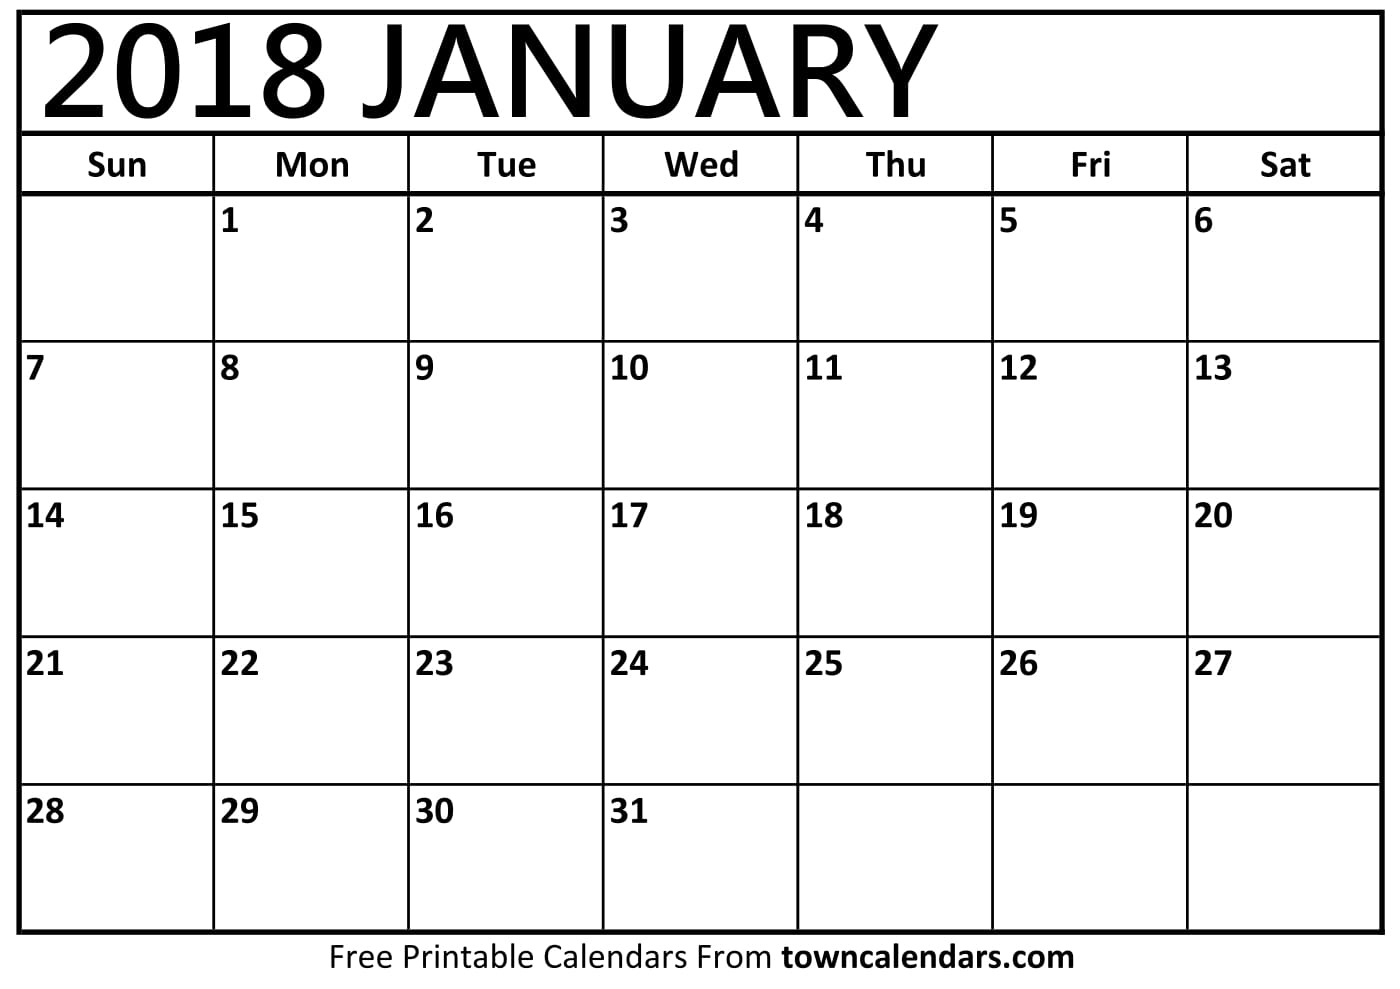 printable-january-2018-calendar-towncalendars